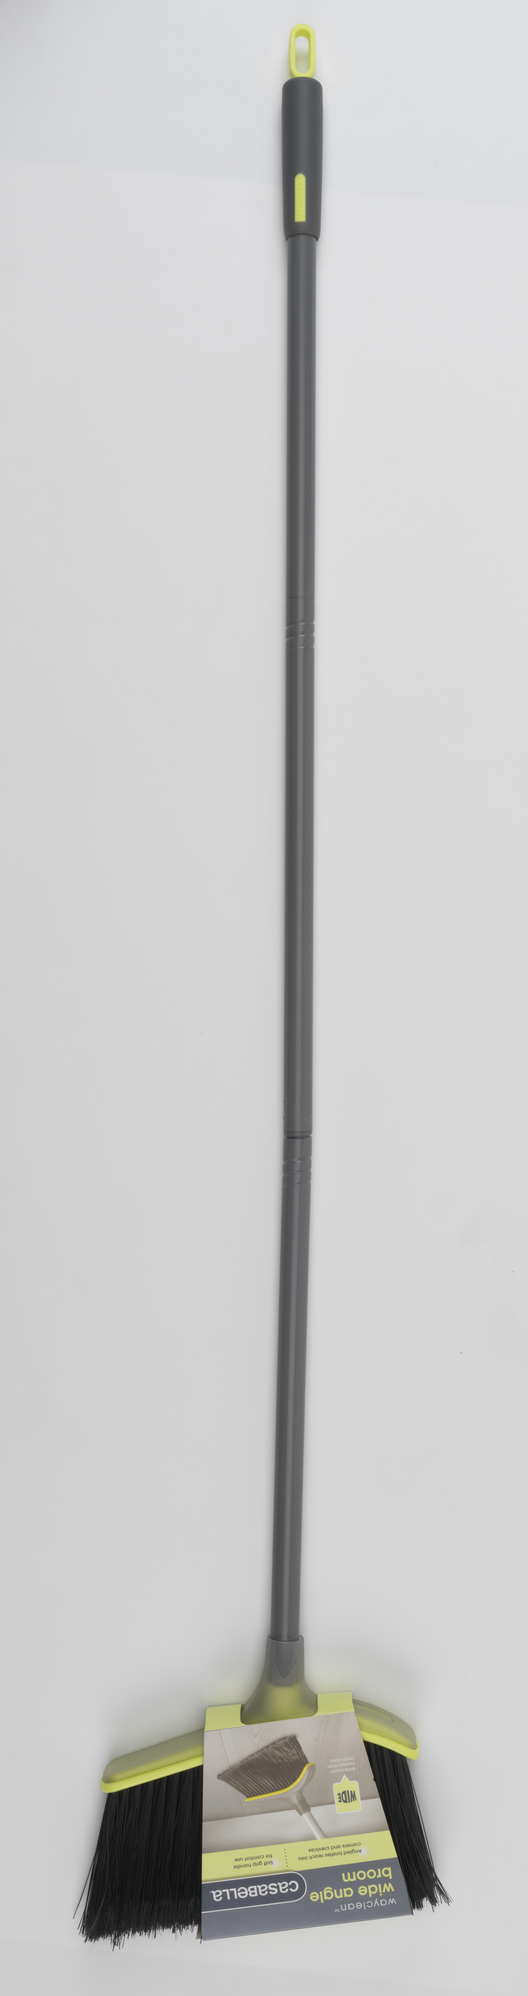 Casabella Wayclean Wide Angle Broom, Gray - image 2 of 2